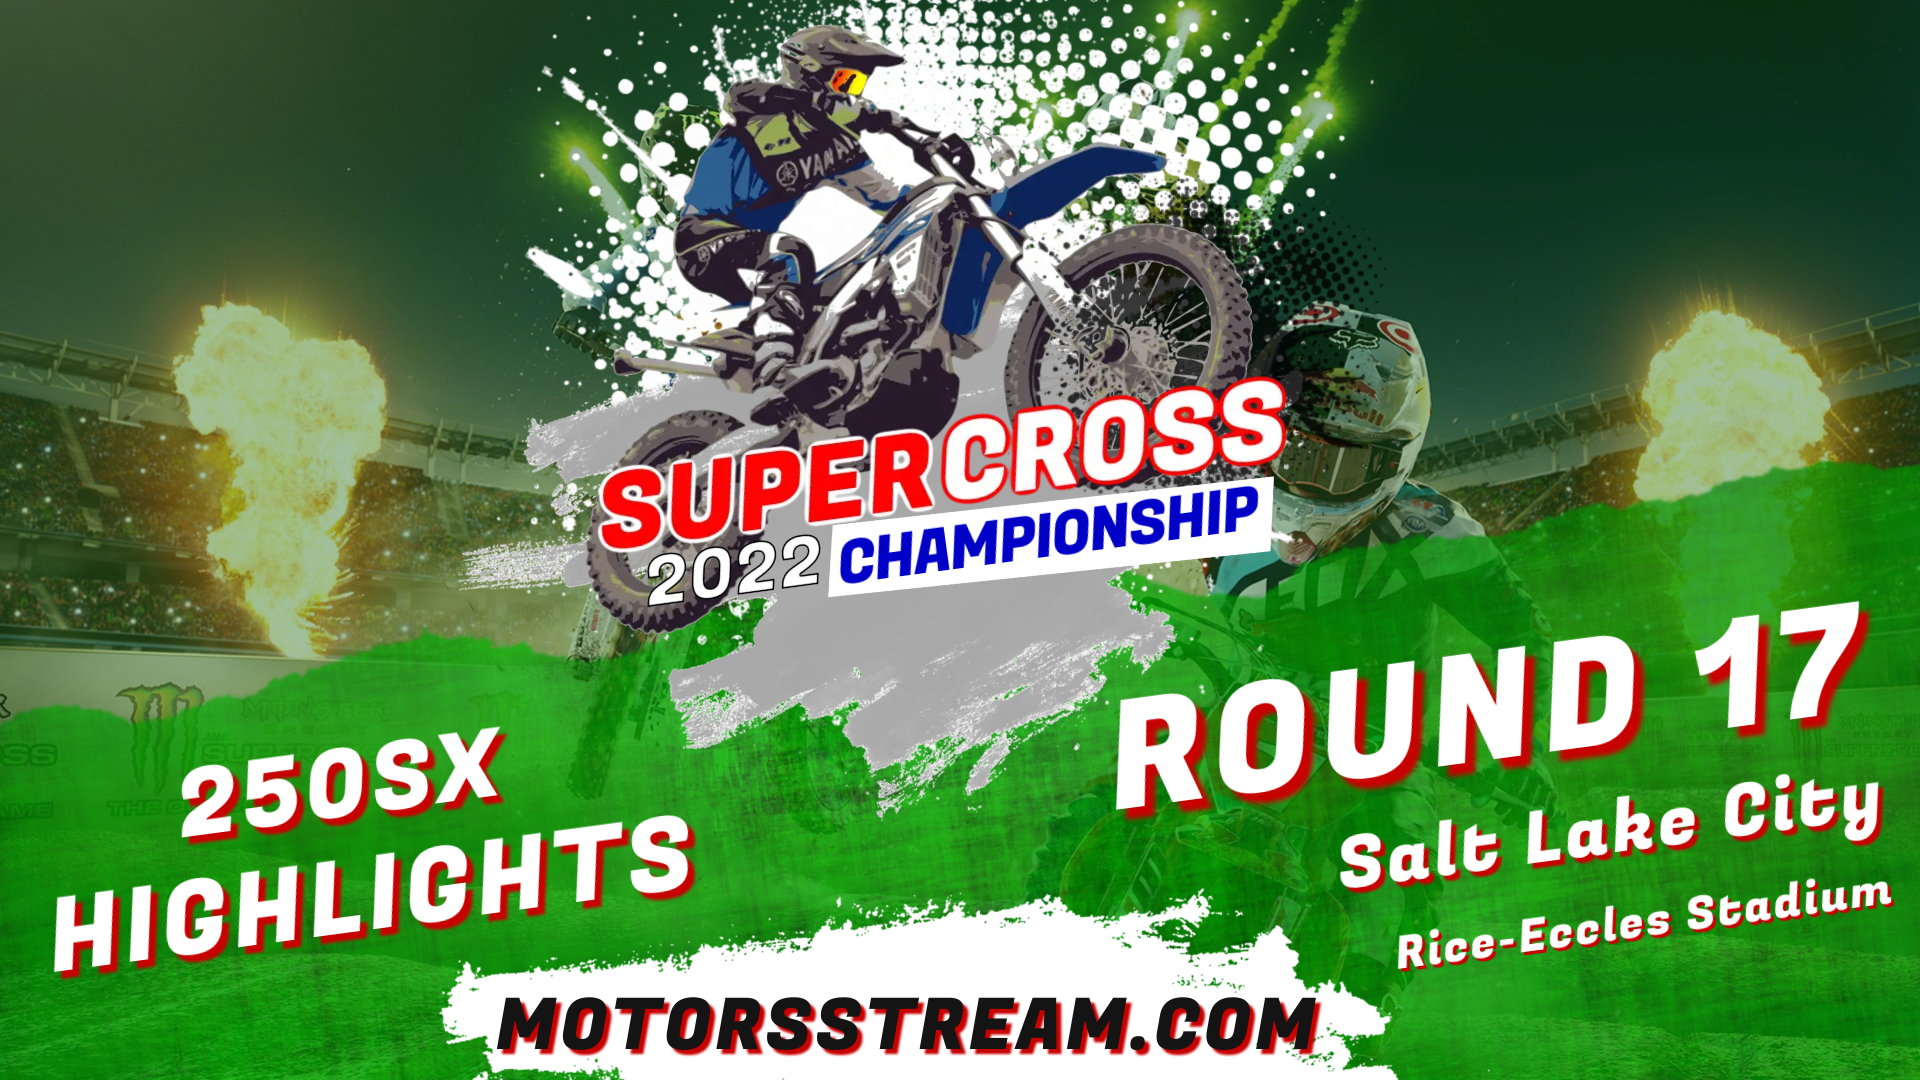 Supercross Round 17 Salt Lake City 250SX Highlights 2022